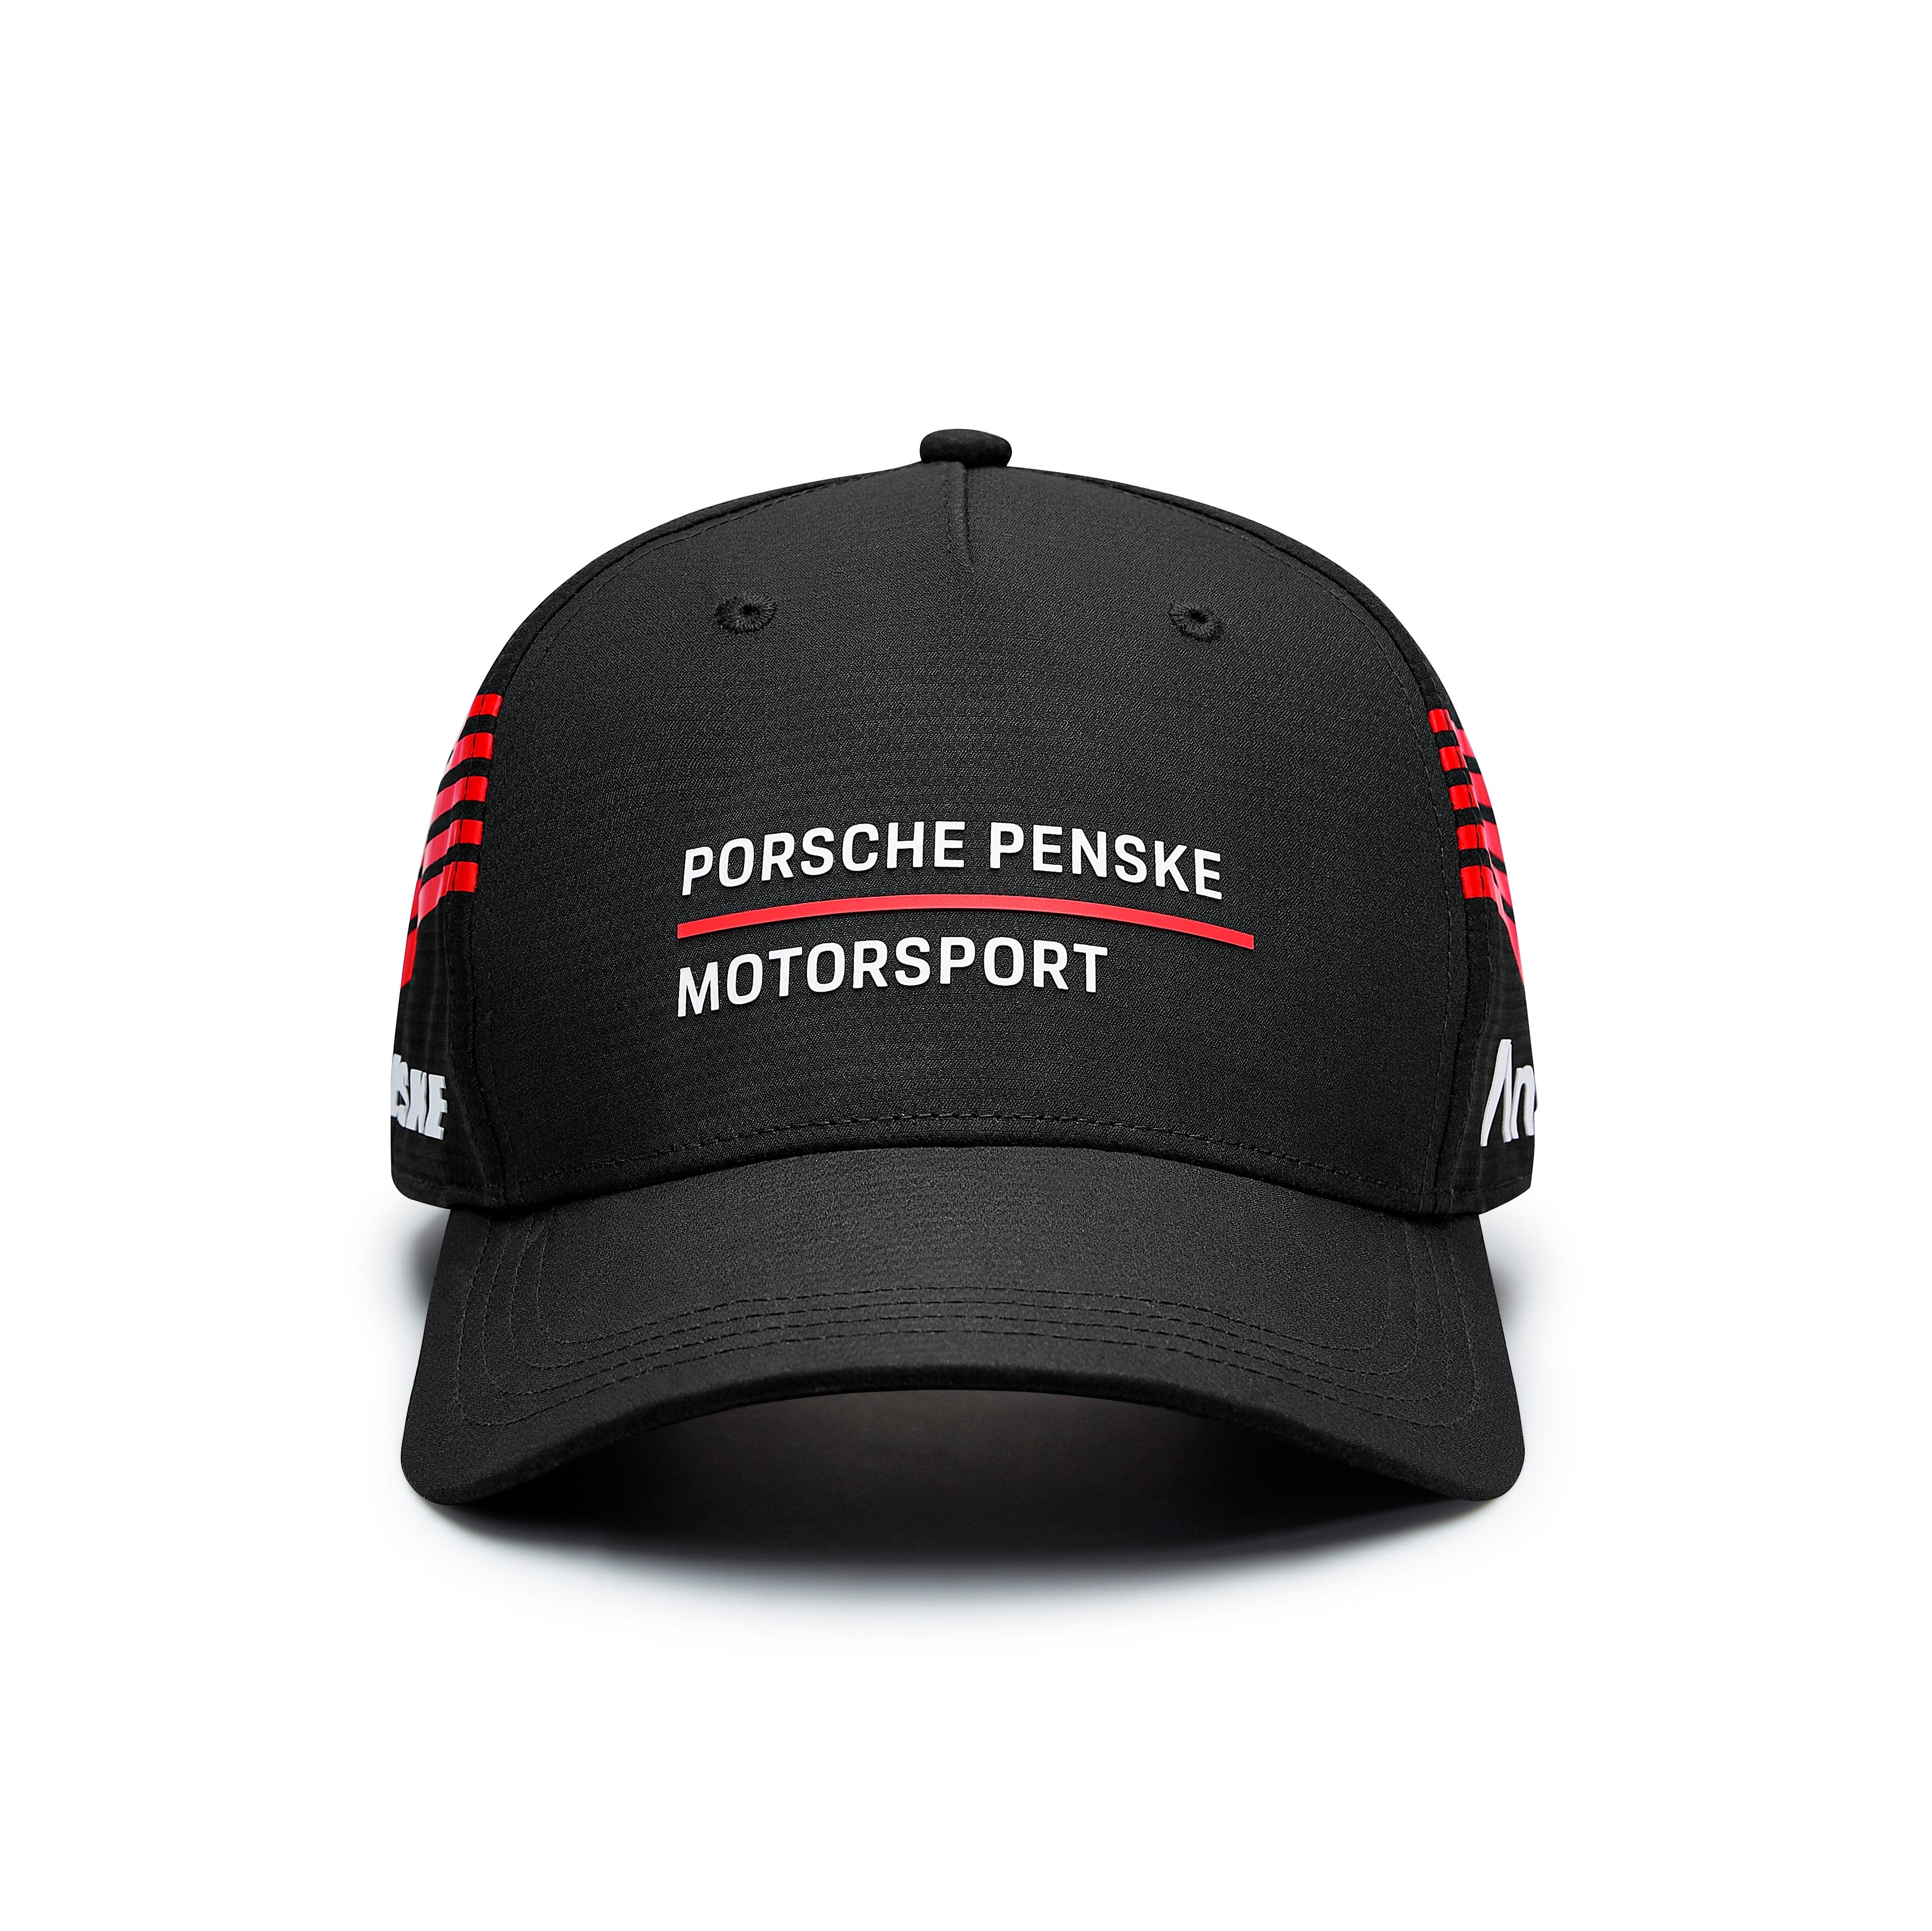 Porsche Penske Motorsport Hat - Black